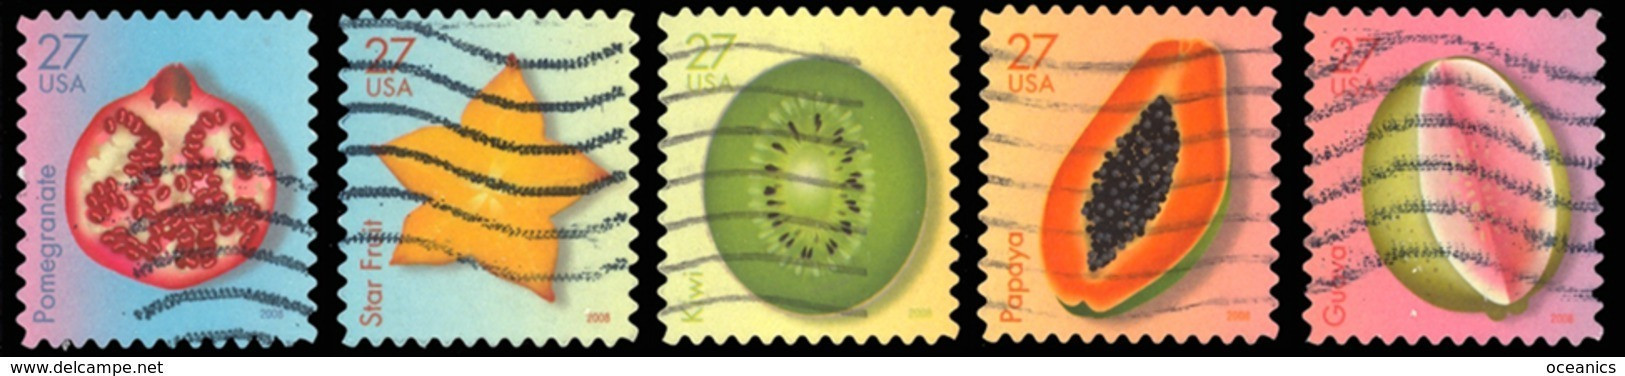 Etats-Unis / United States (Scott No.4253-57 - Fruits Tropicaux / Tropical Fruits) (o) - Gebraucht